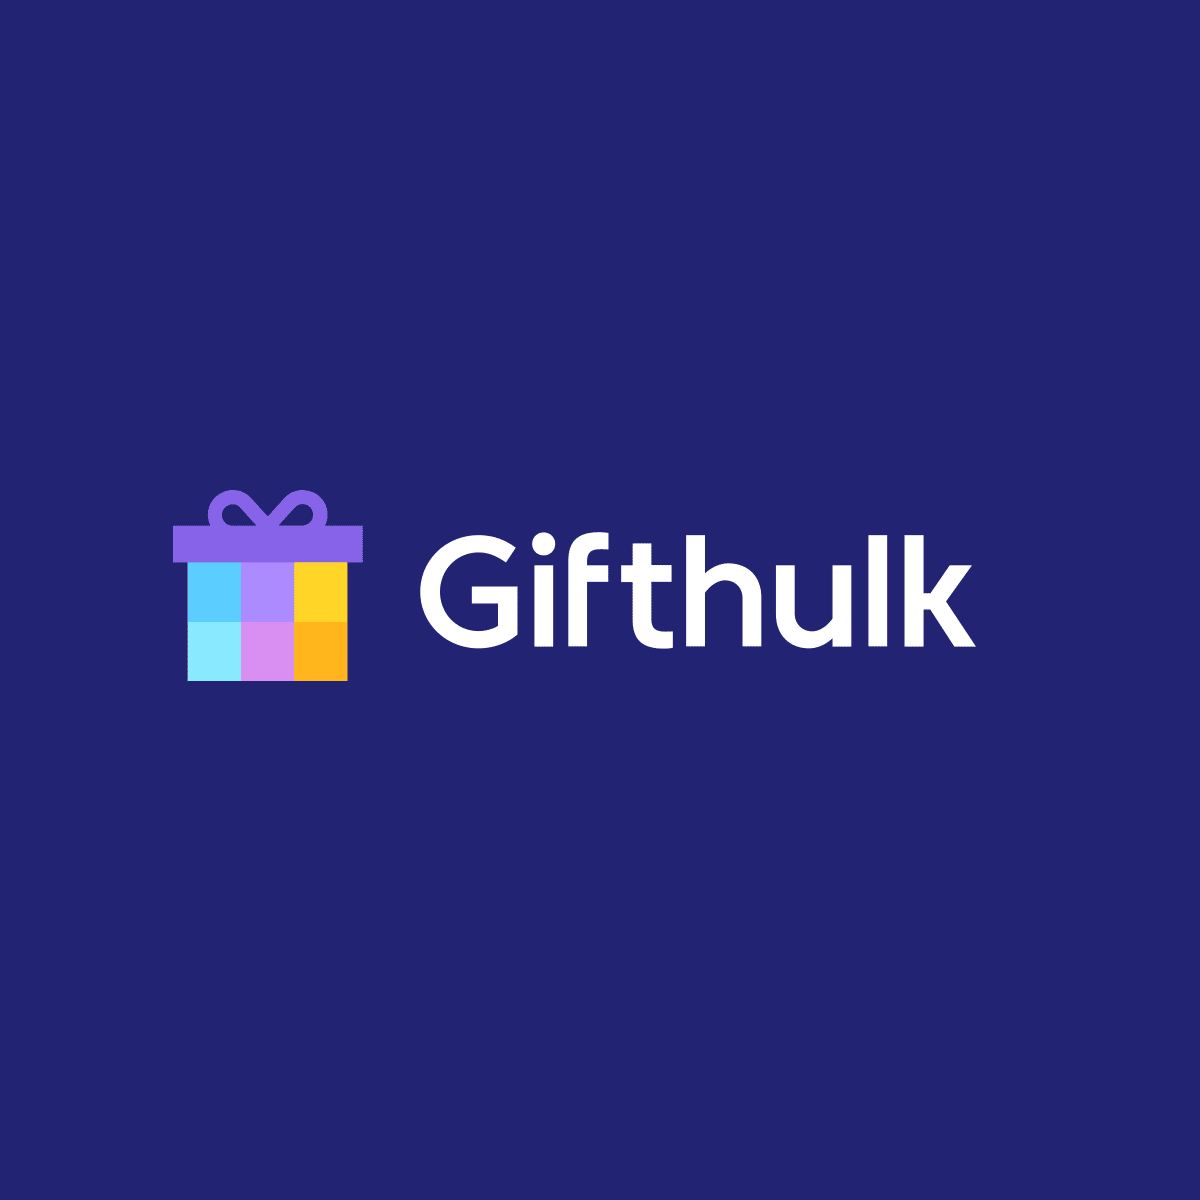 GiftHulk Logo